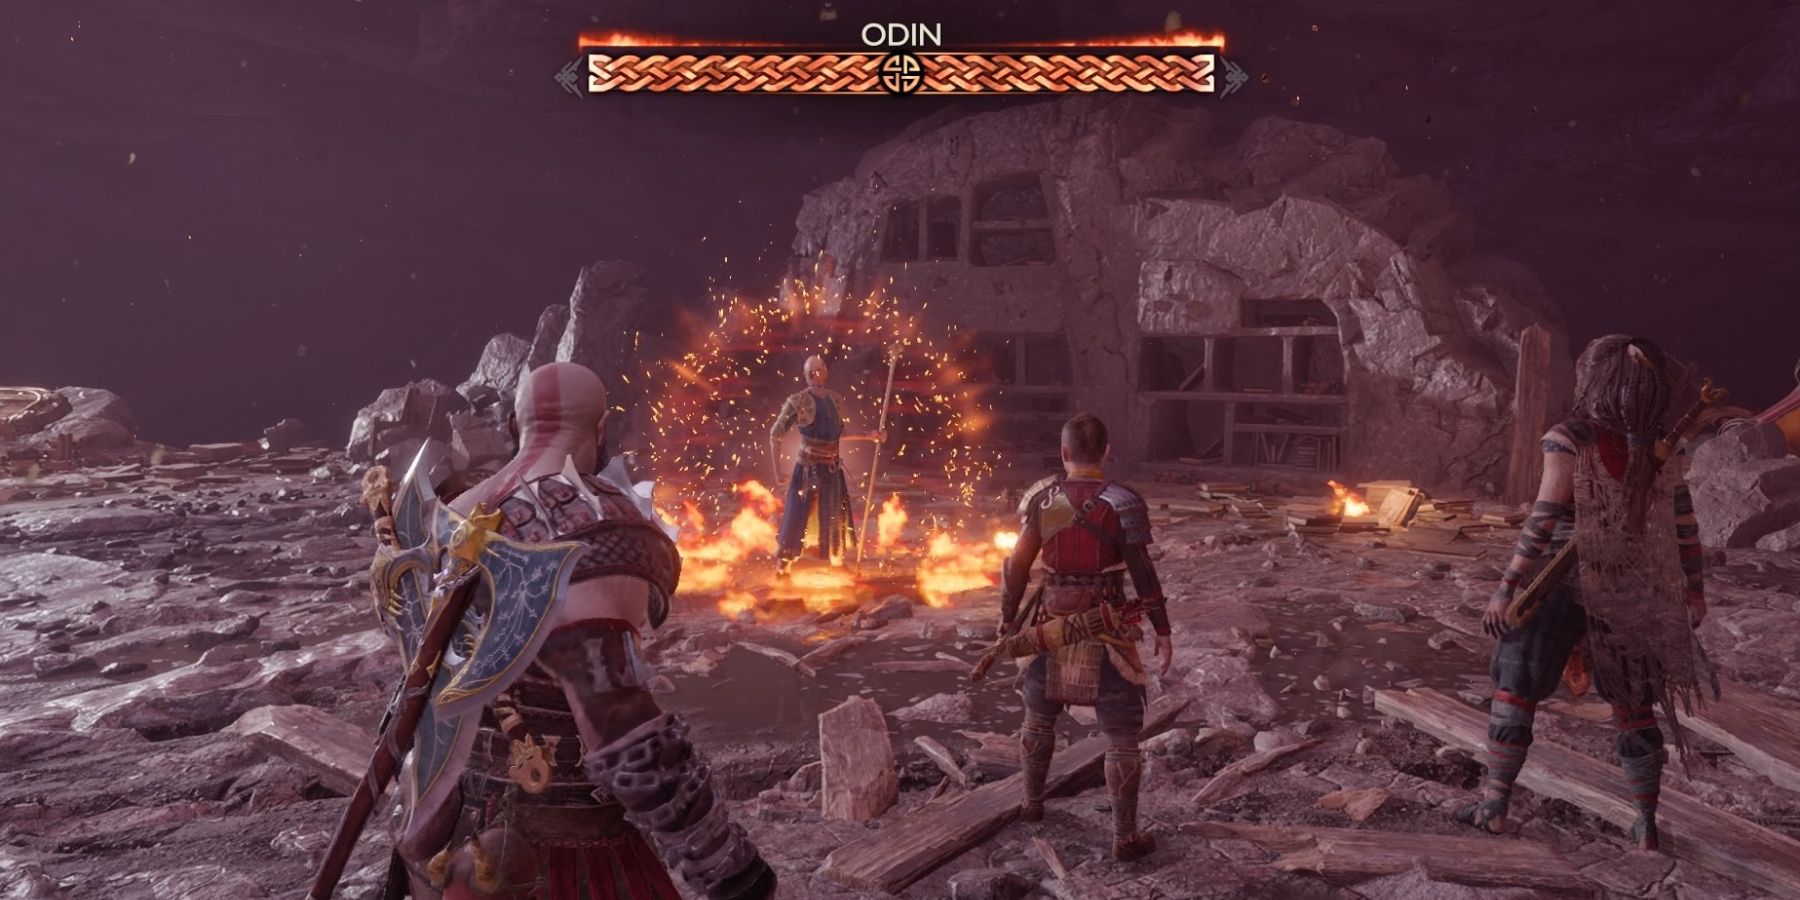 Kratos, Atreus, and Freya face Odin in God of War Ragnarok